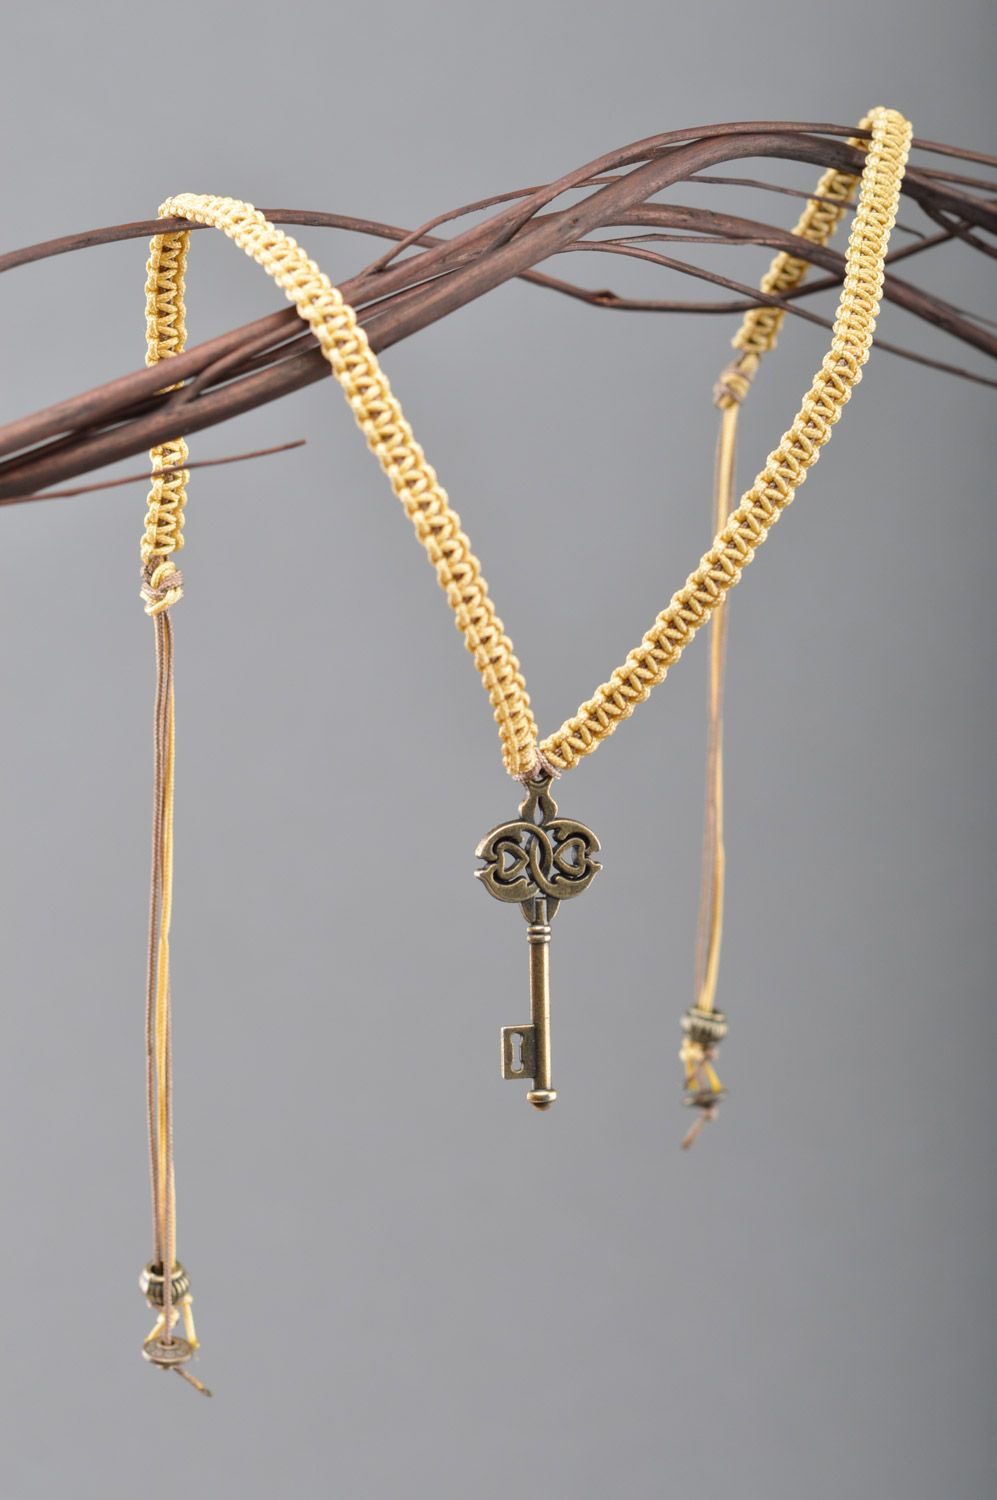 Handmade friendship wrist bracelet woven of cord with metal key-shaped charm photo 1